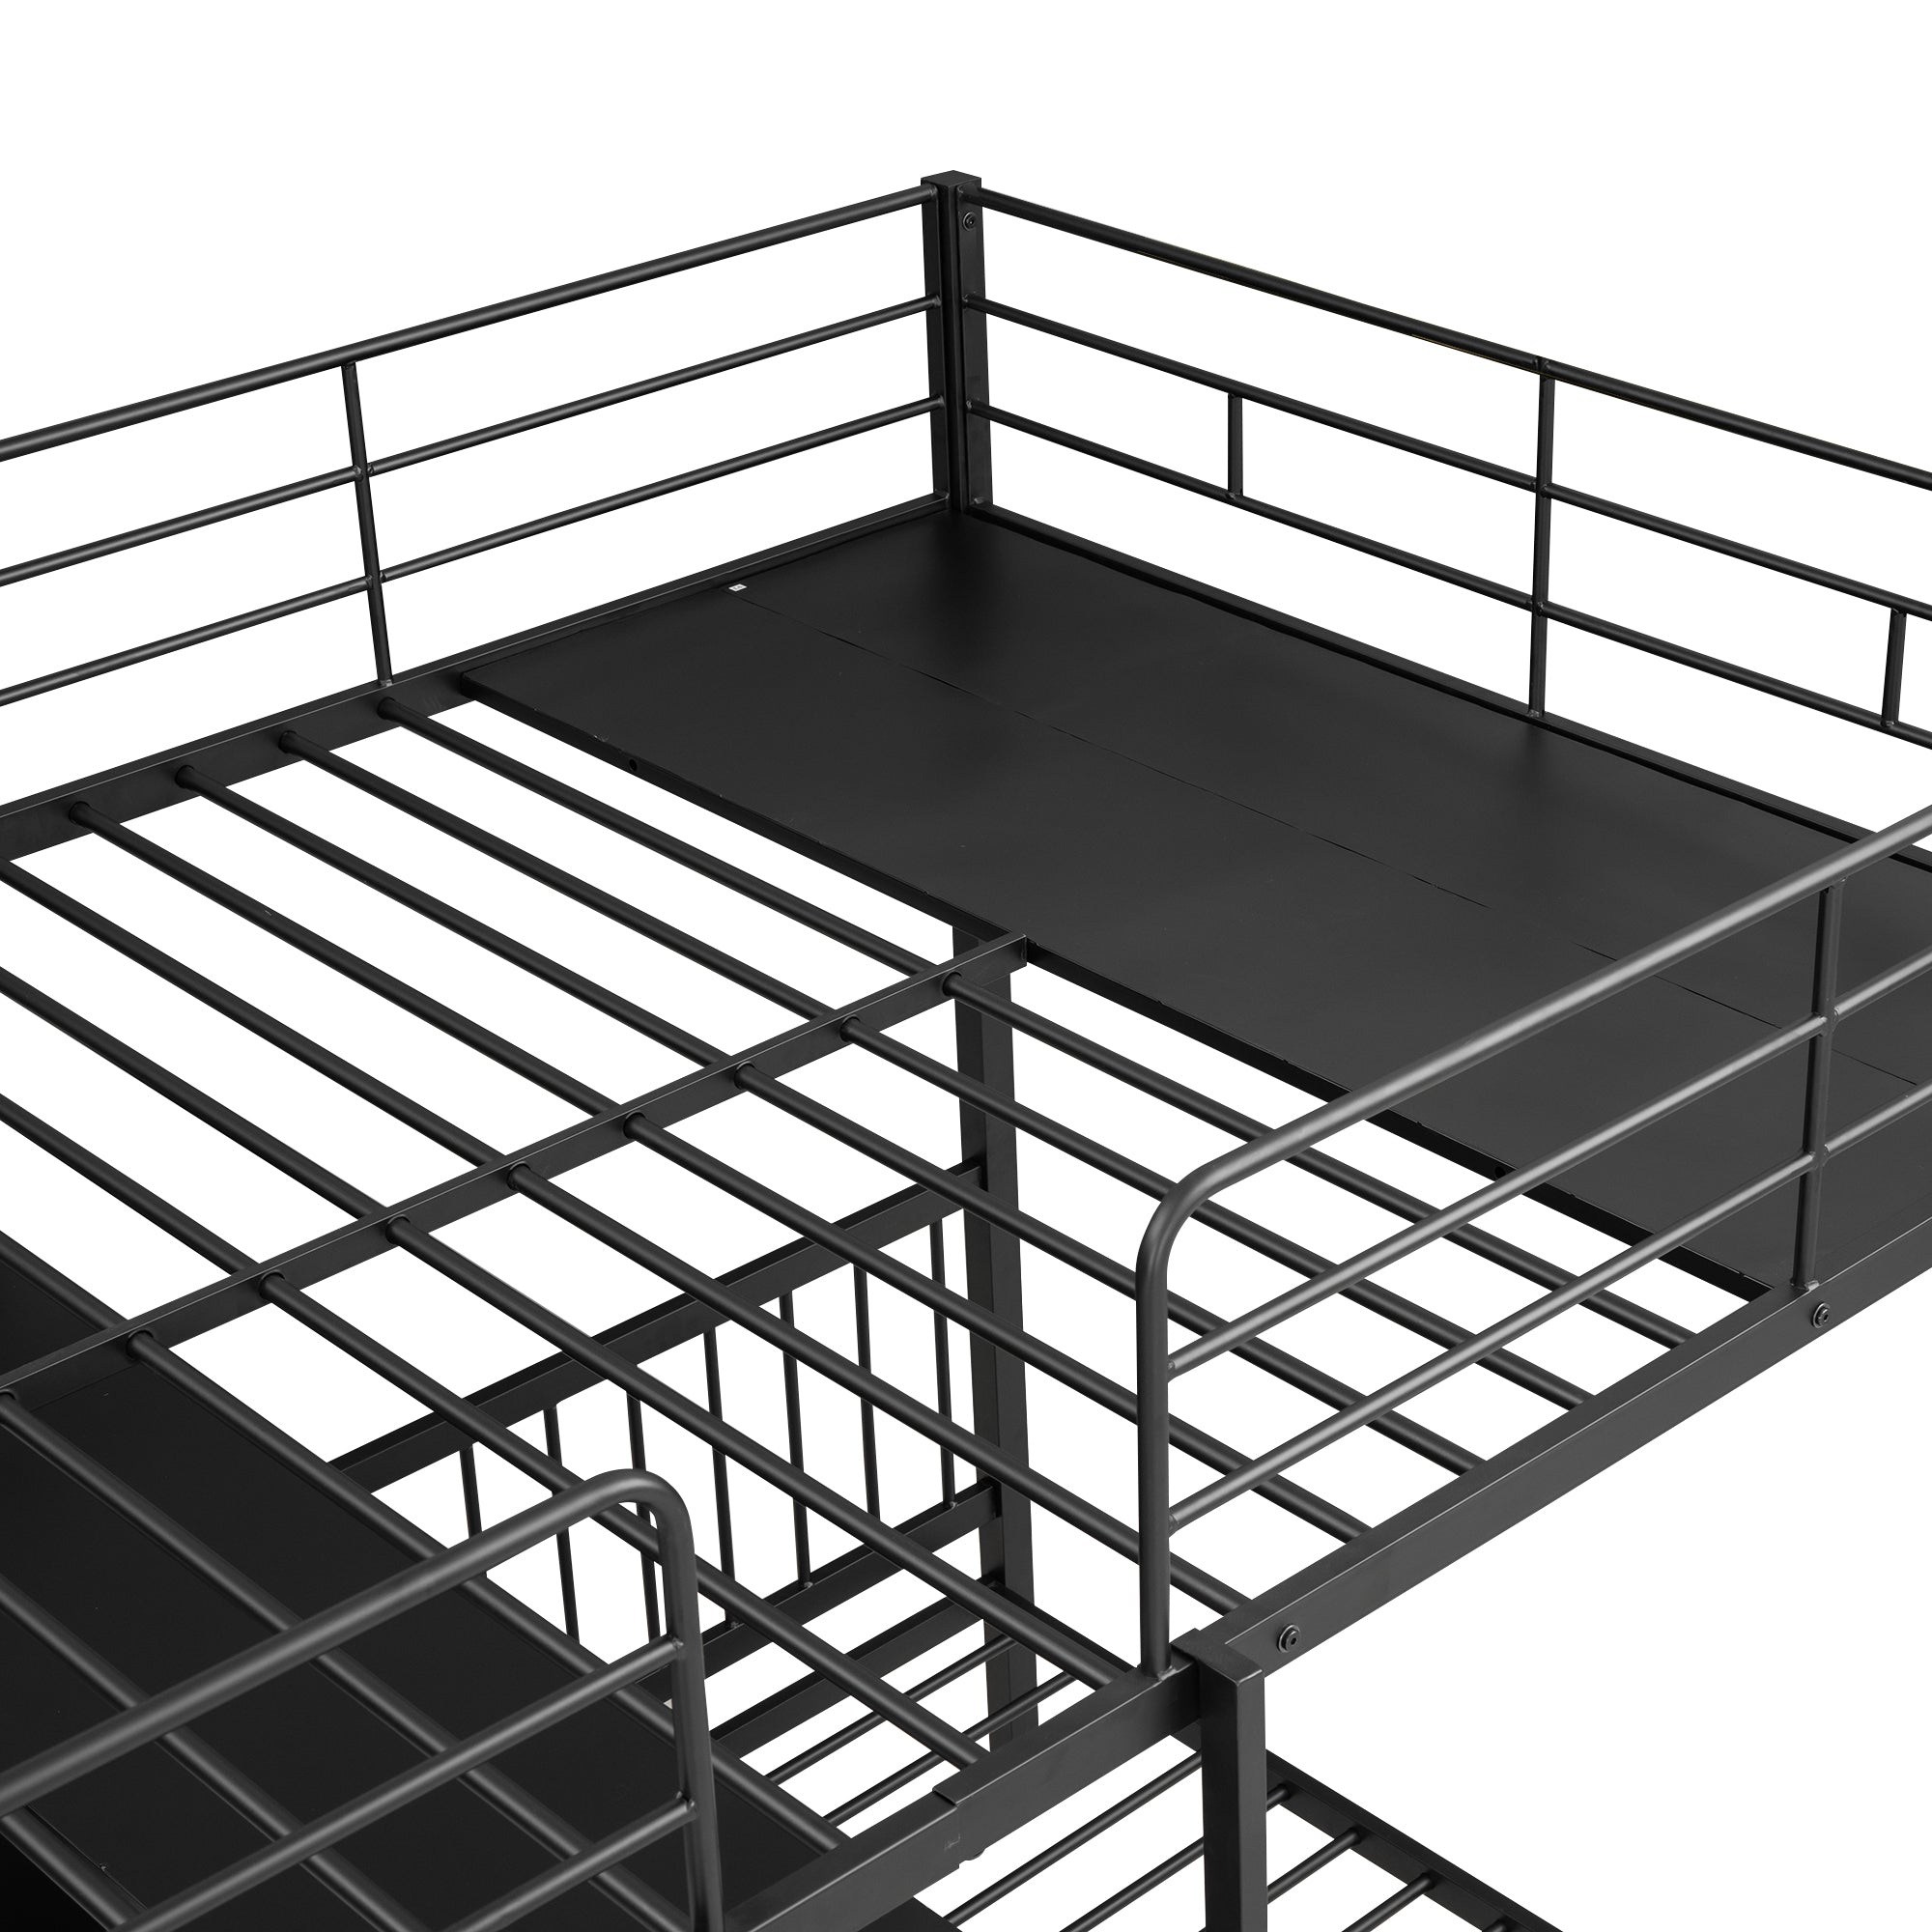 Bellemave® Full Over Twin Metal Bunk Bed with Built-in Desk, Shelves and Ladder Bellemave®